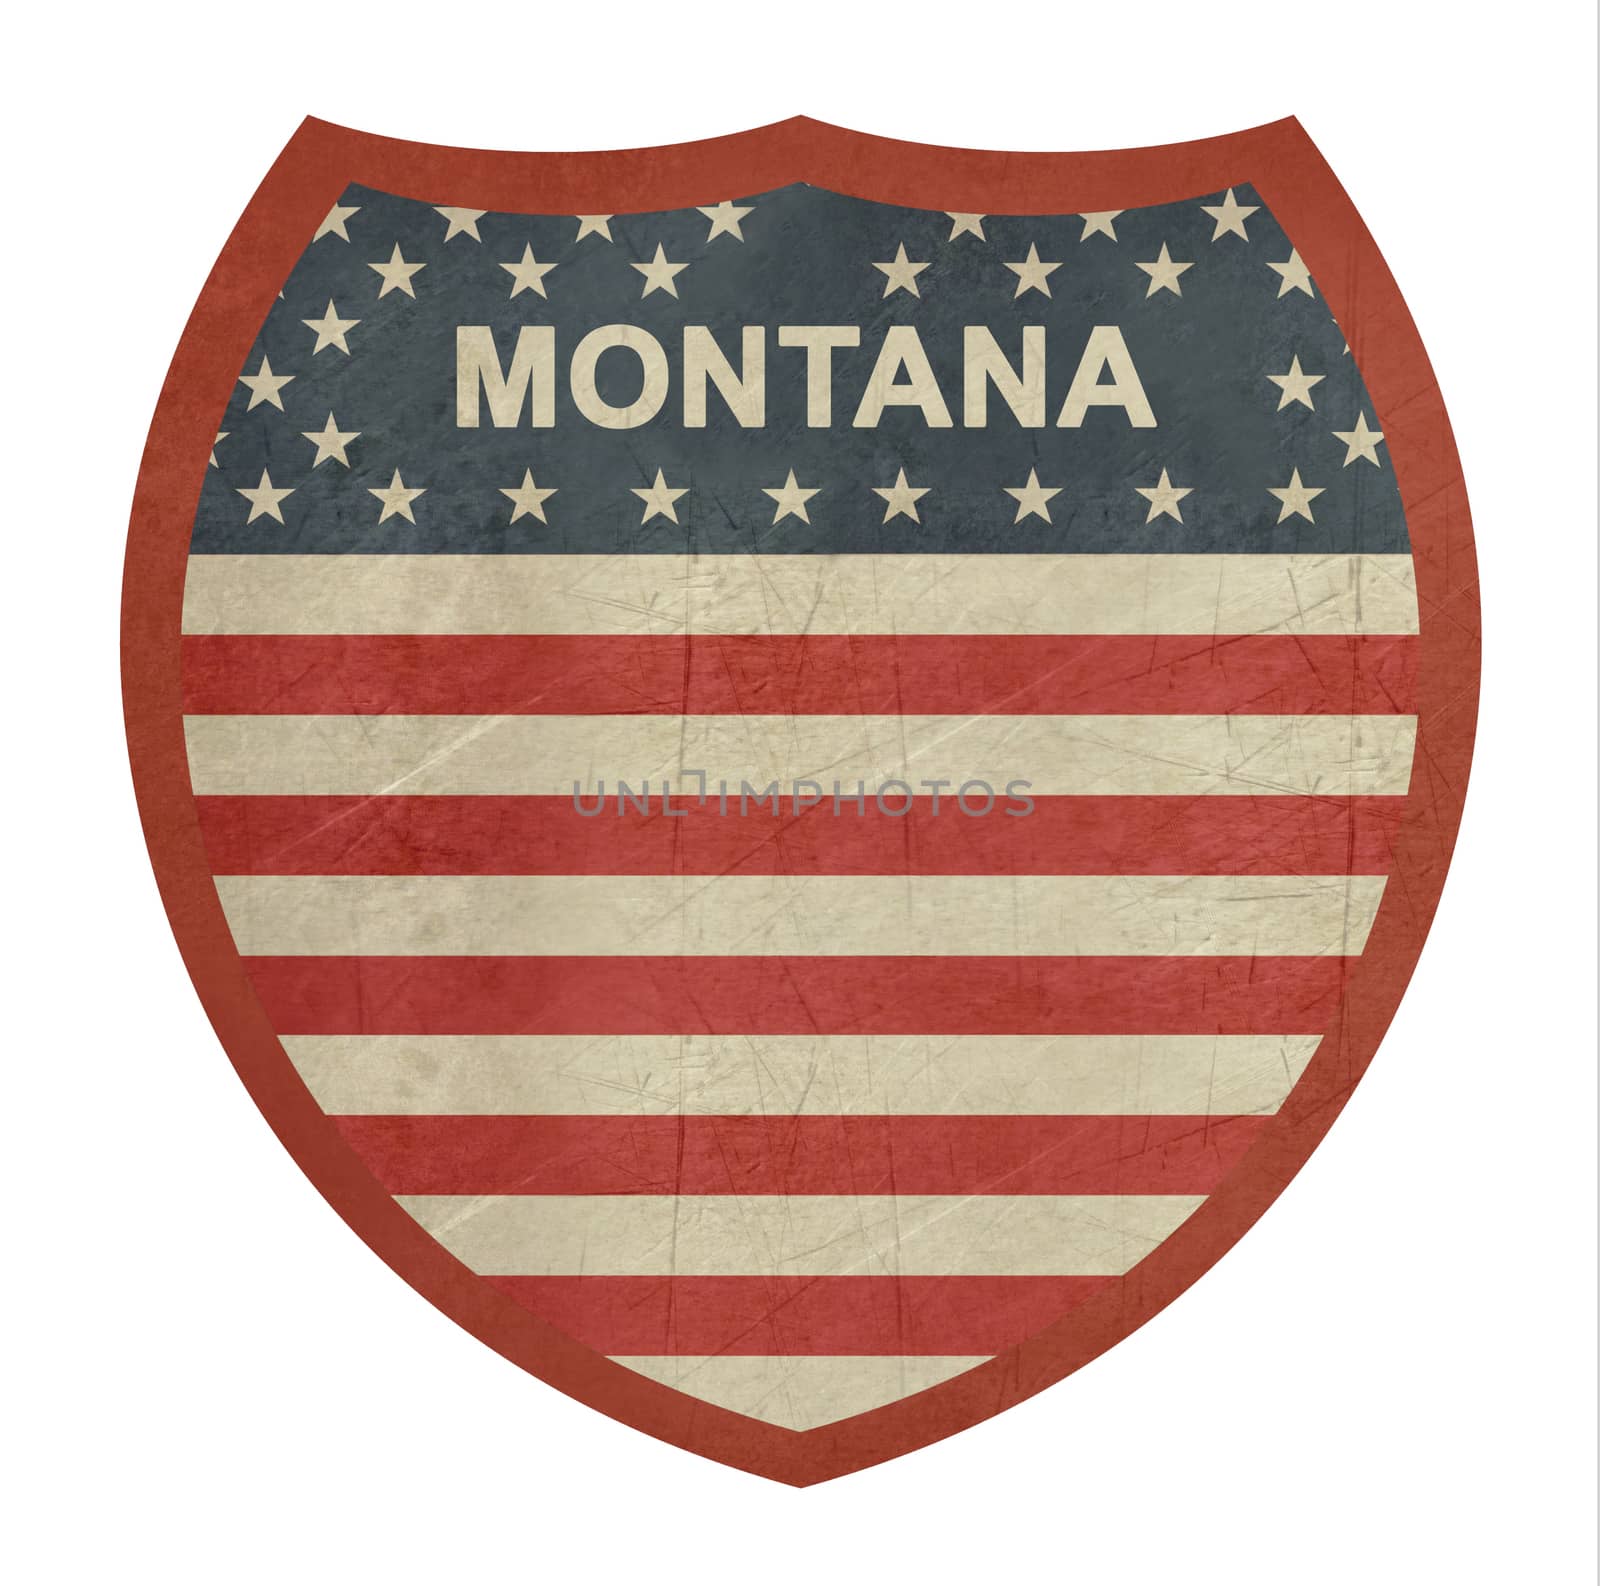 Grunge Montana American interstate highway sign by speedfighter